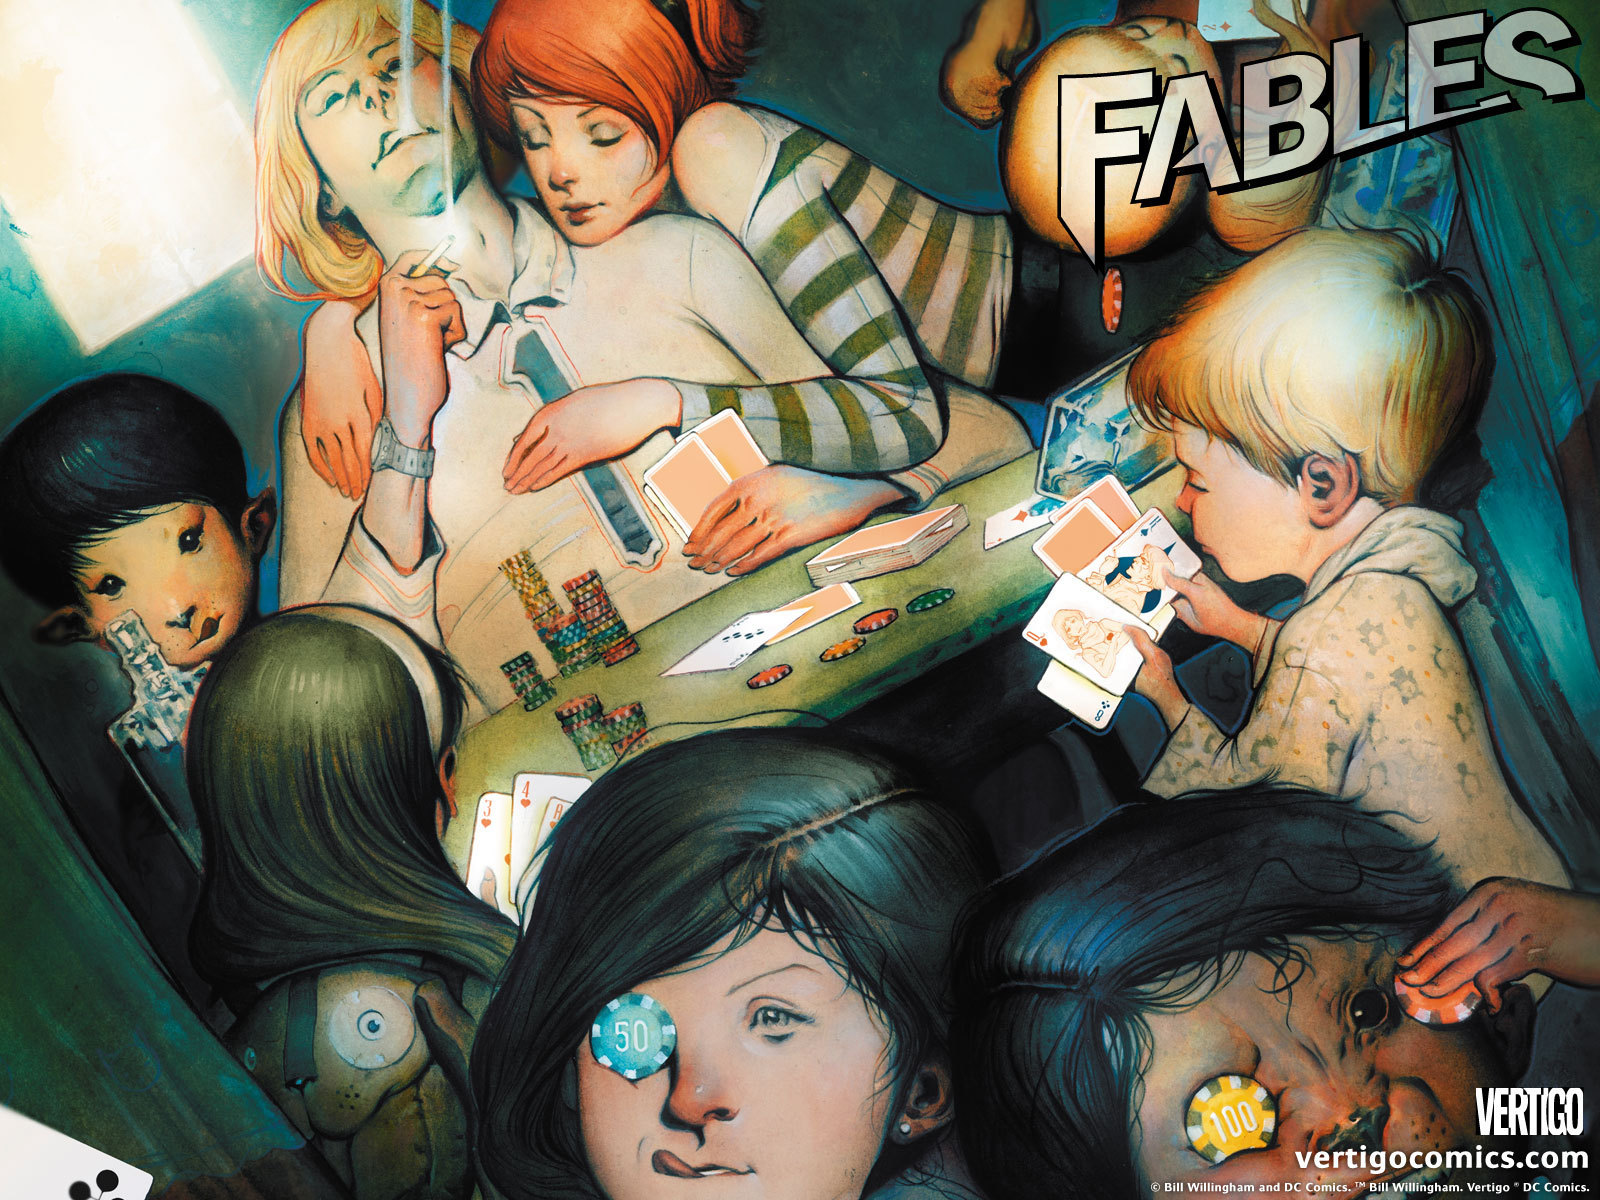 269142 Bild herunterladen comics, fables, fabeln (comics), fable - Hintergrundbilder und Bildschirmschoner kostenlos